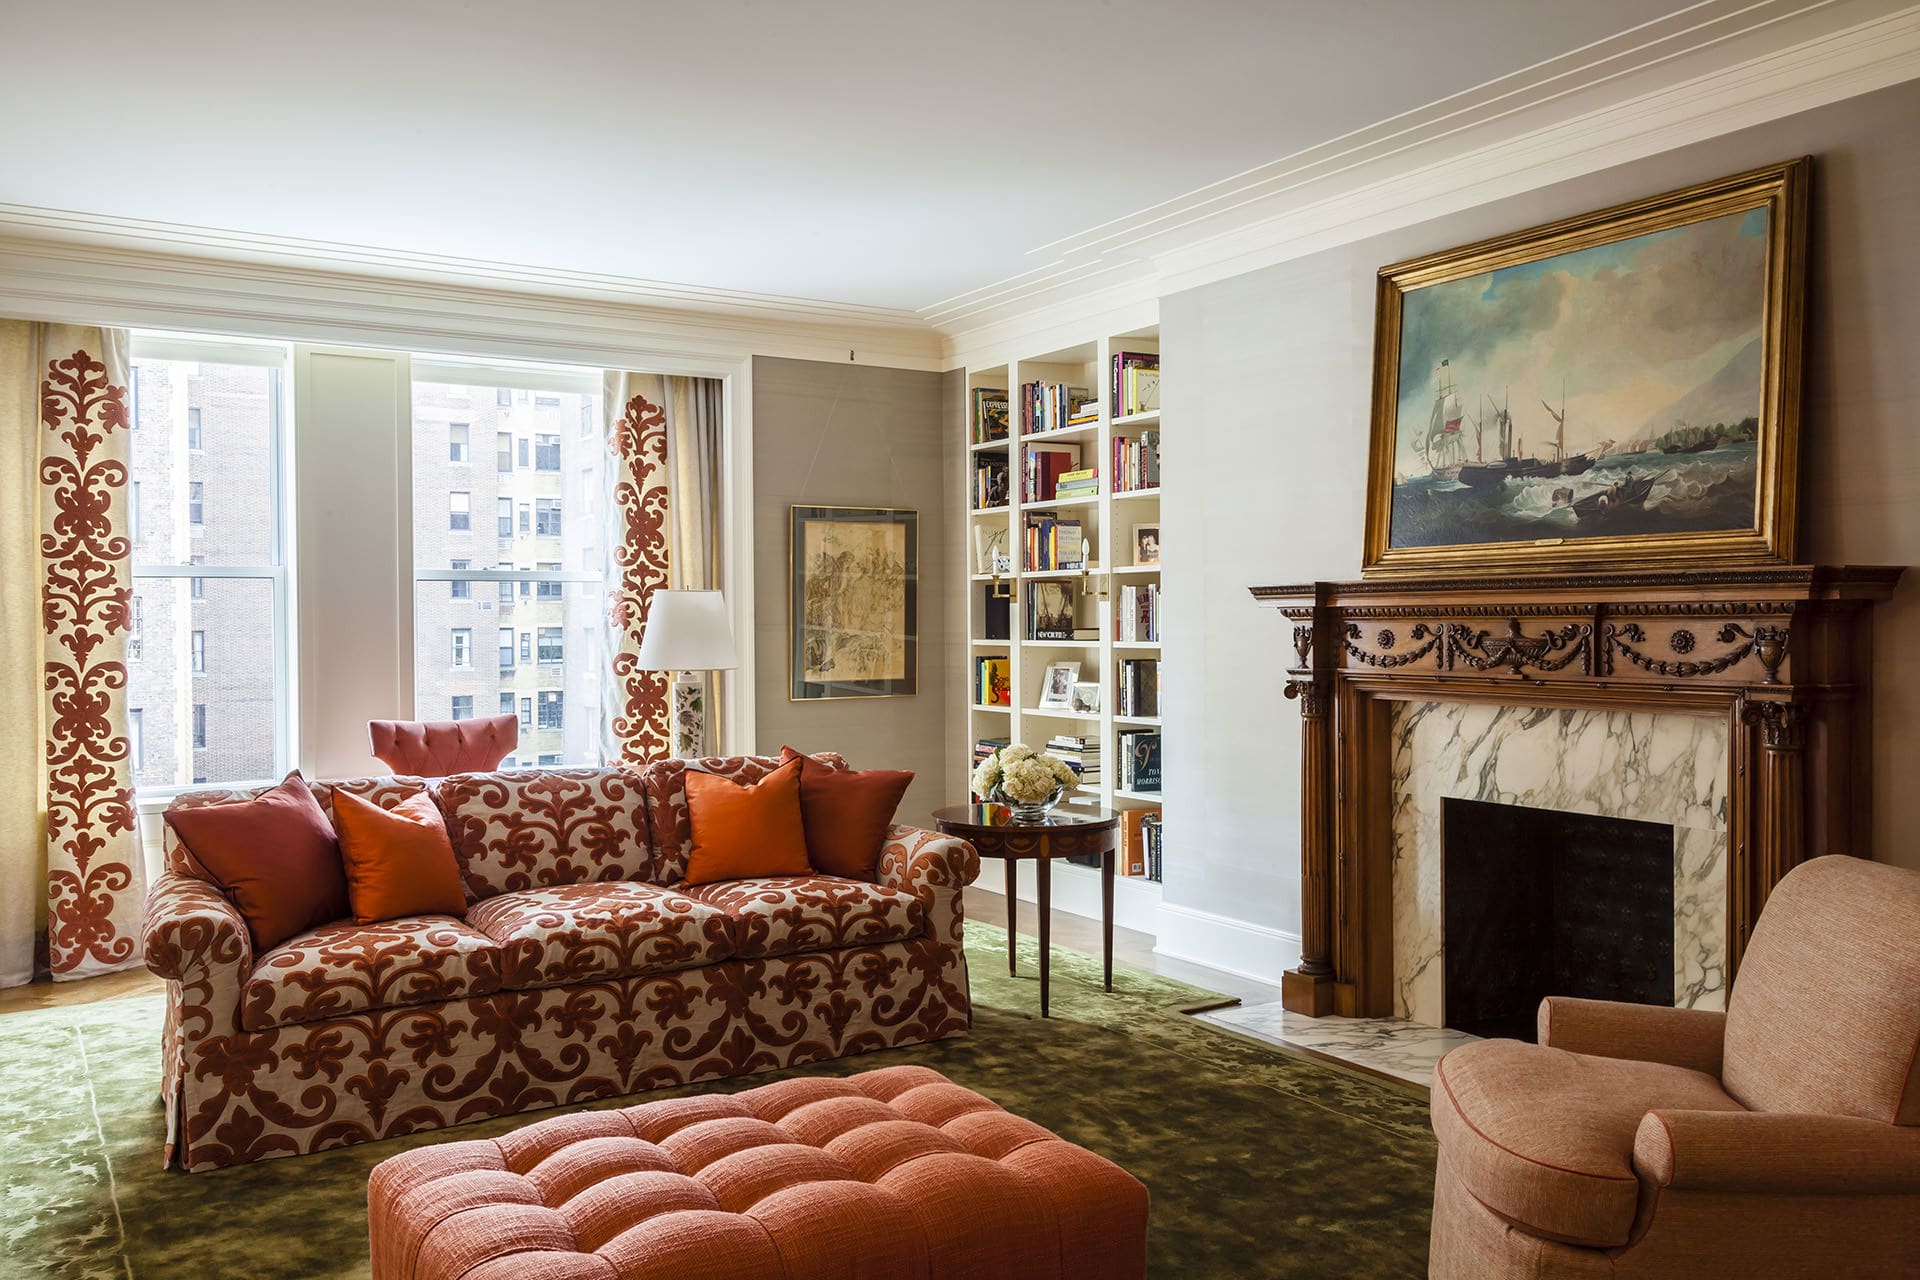 Park Avenue Apartment Formal Living Room After Renovation | Rodman Paul Architects